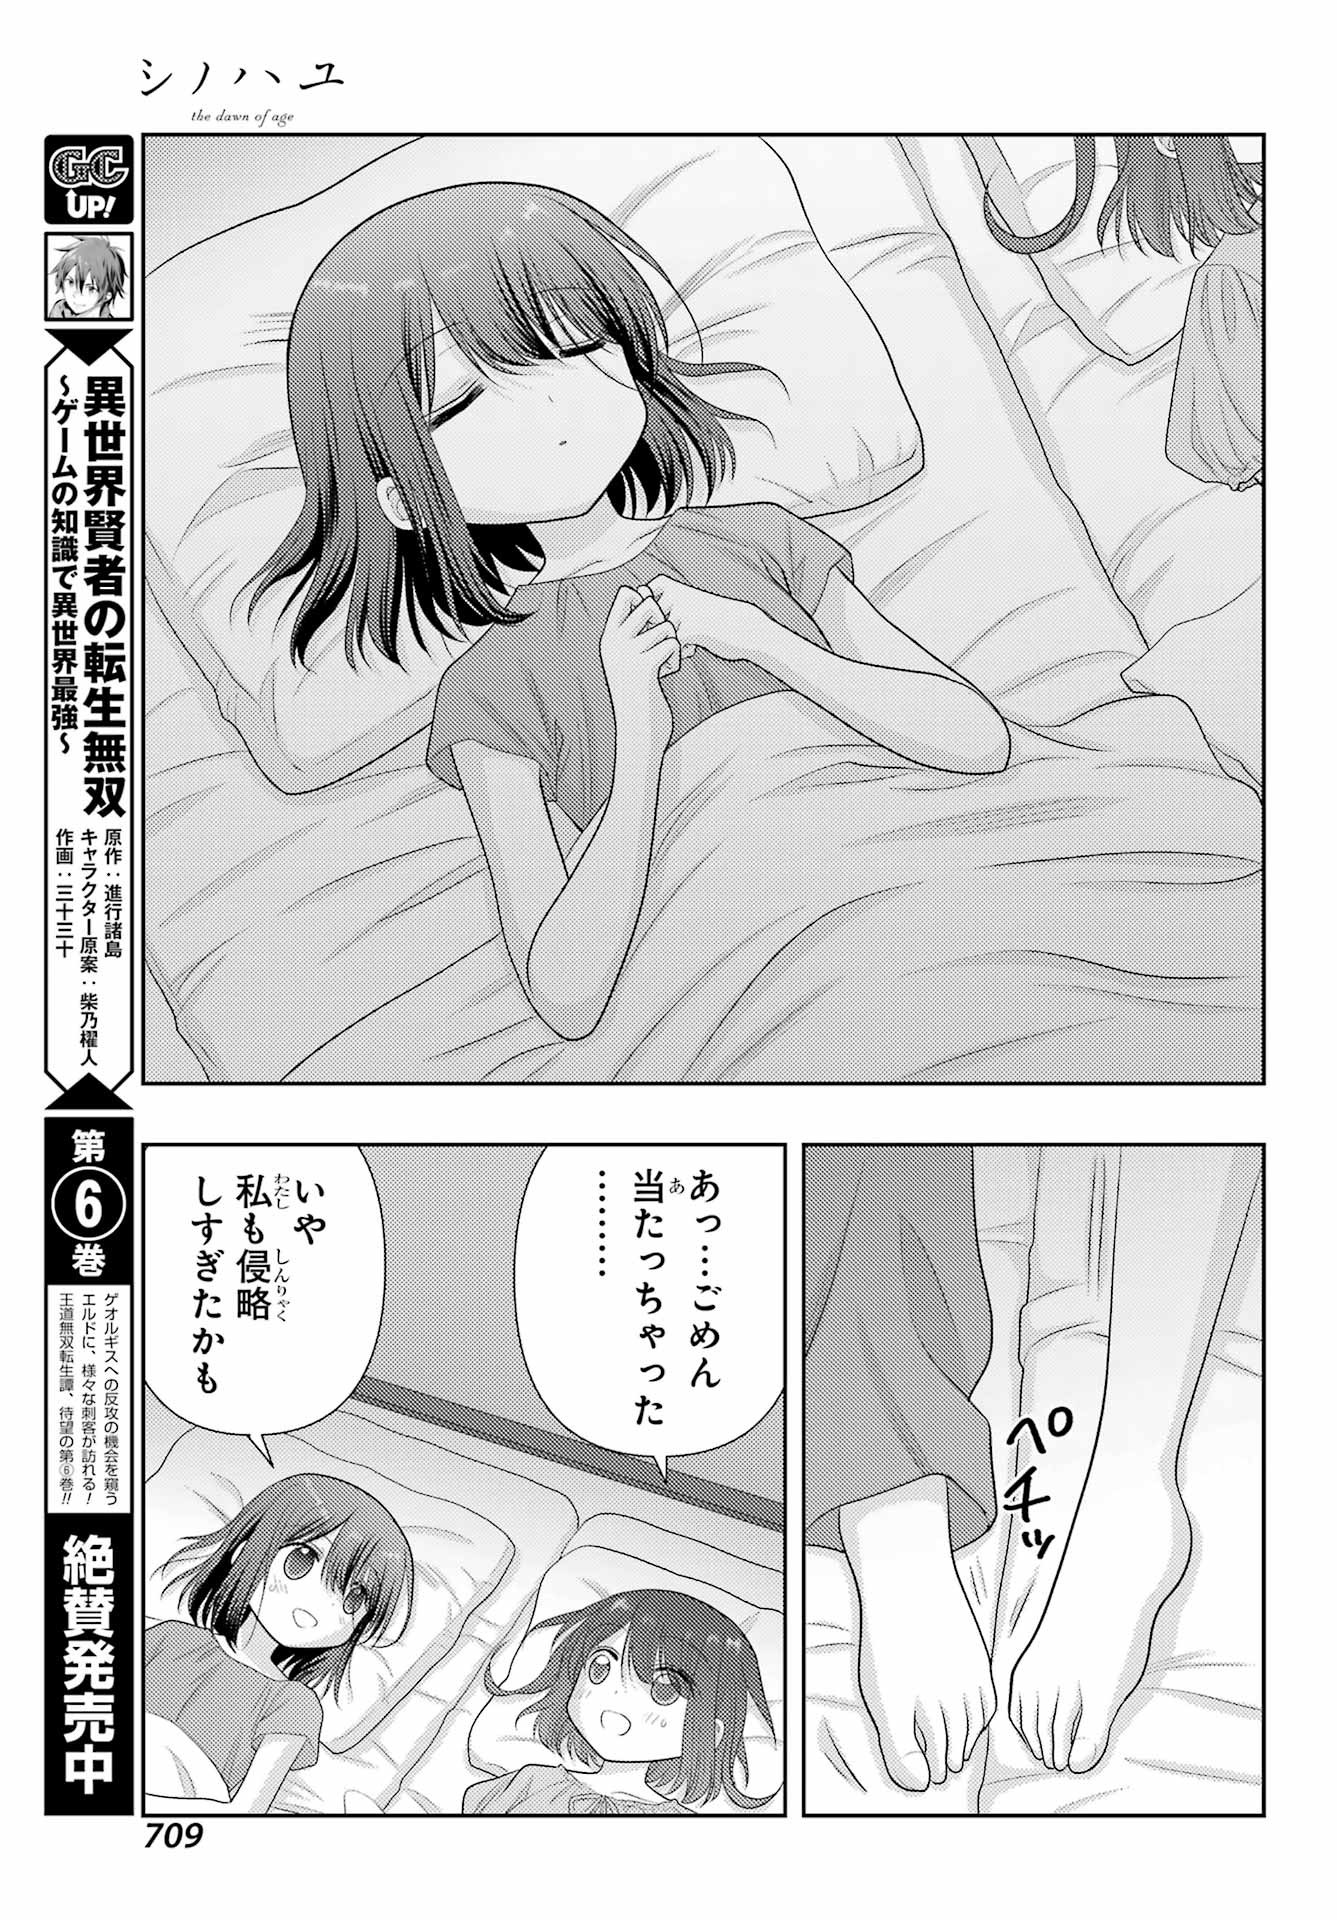 Shinohayu - The Dawn of Age Manga - Chapter 102 - Page 27